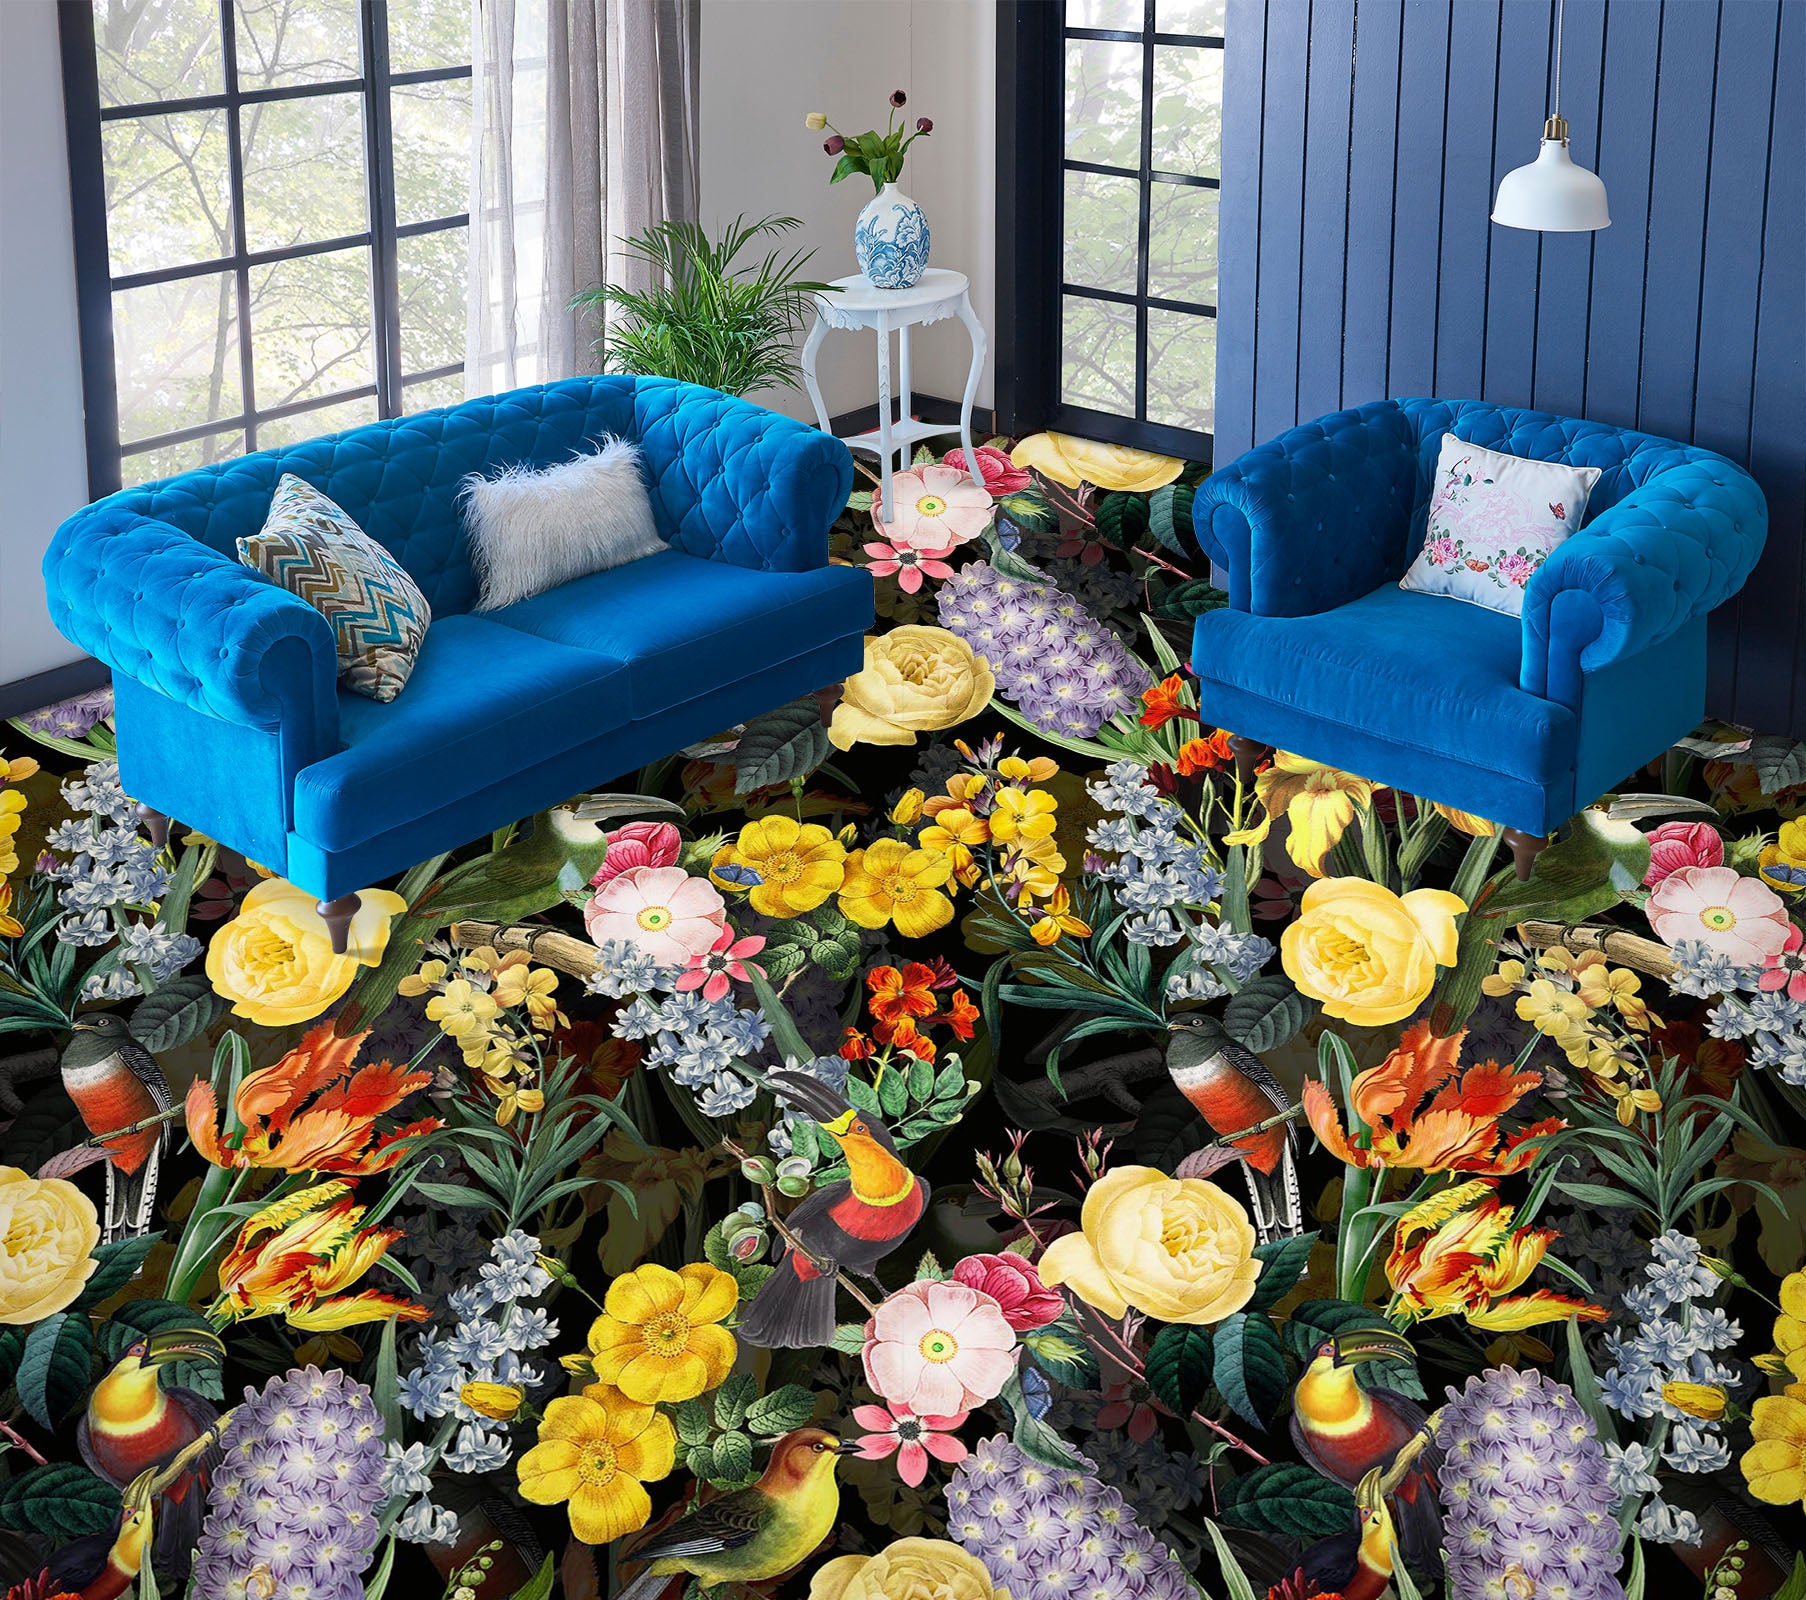 3D Colorful Flower Bush 10016 Uta Naumann Floor Mural